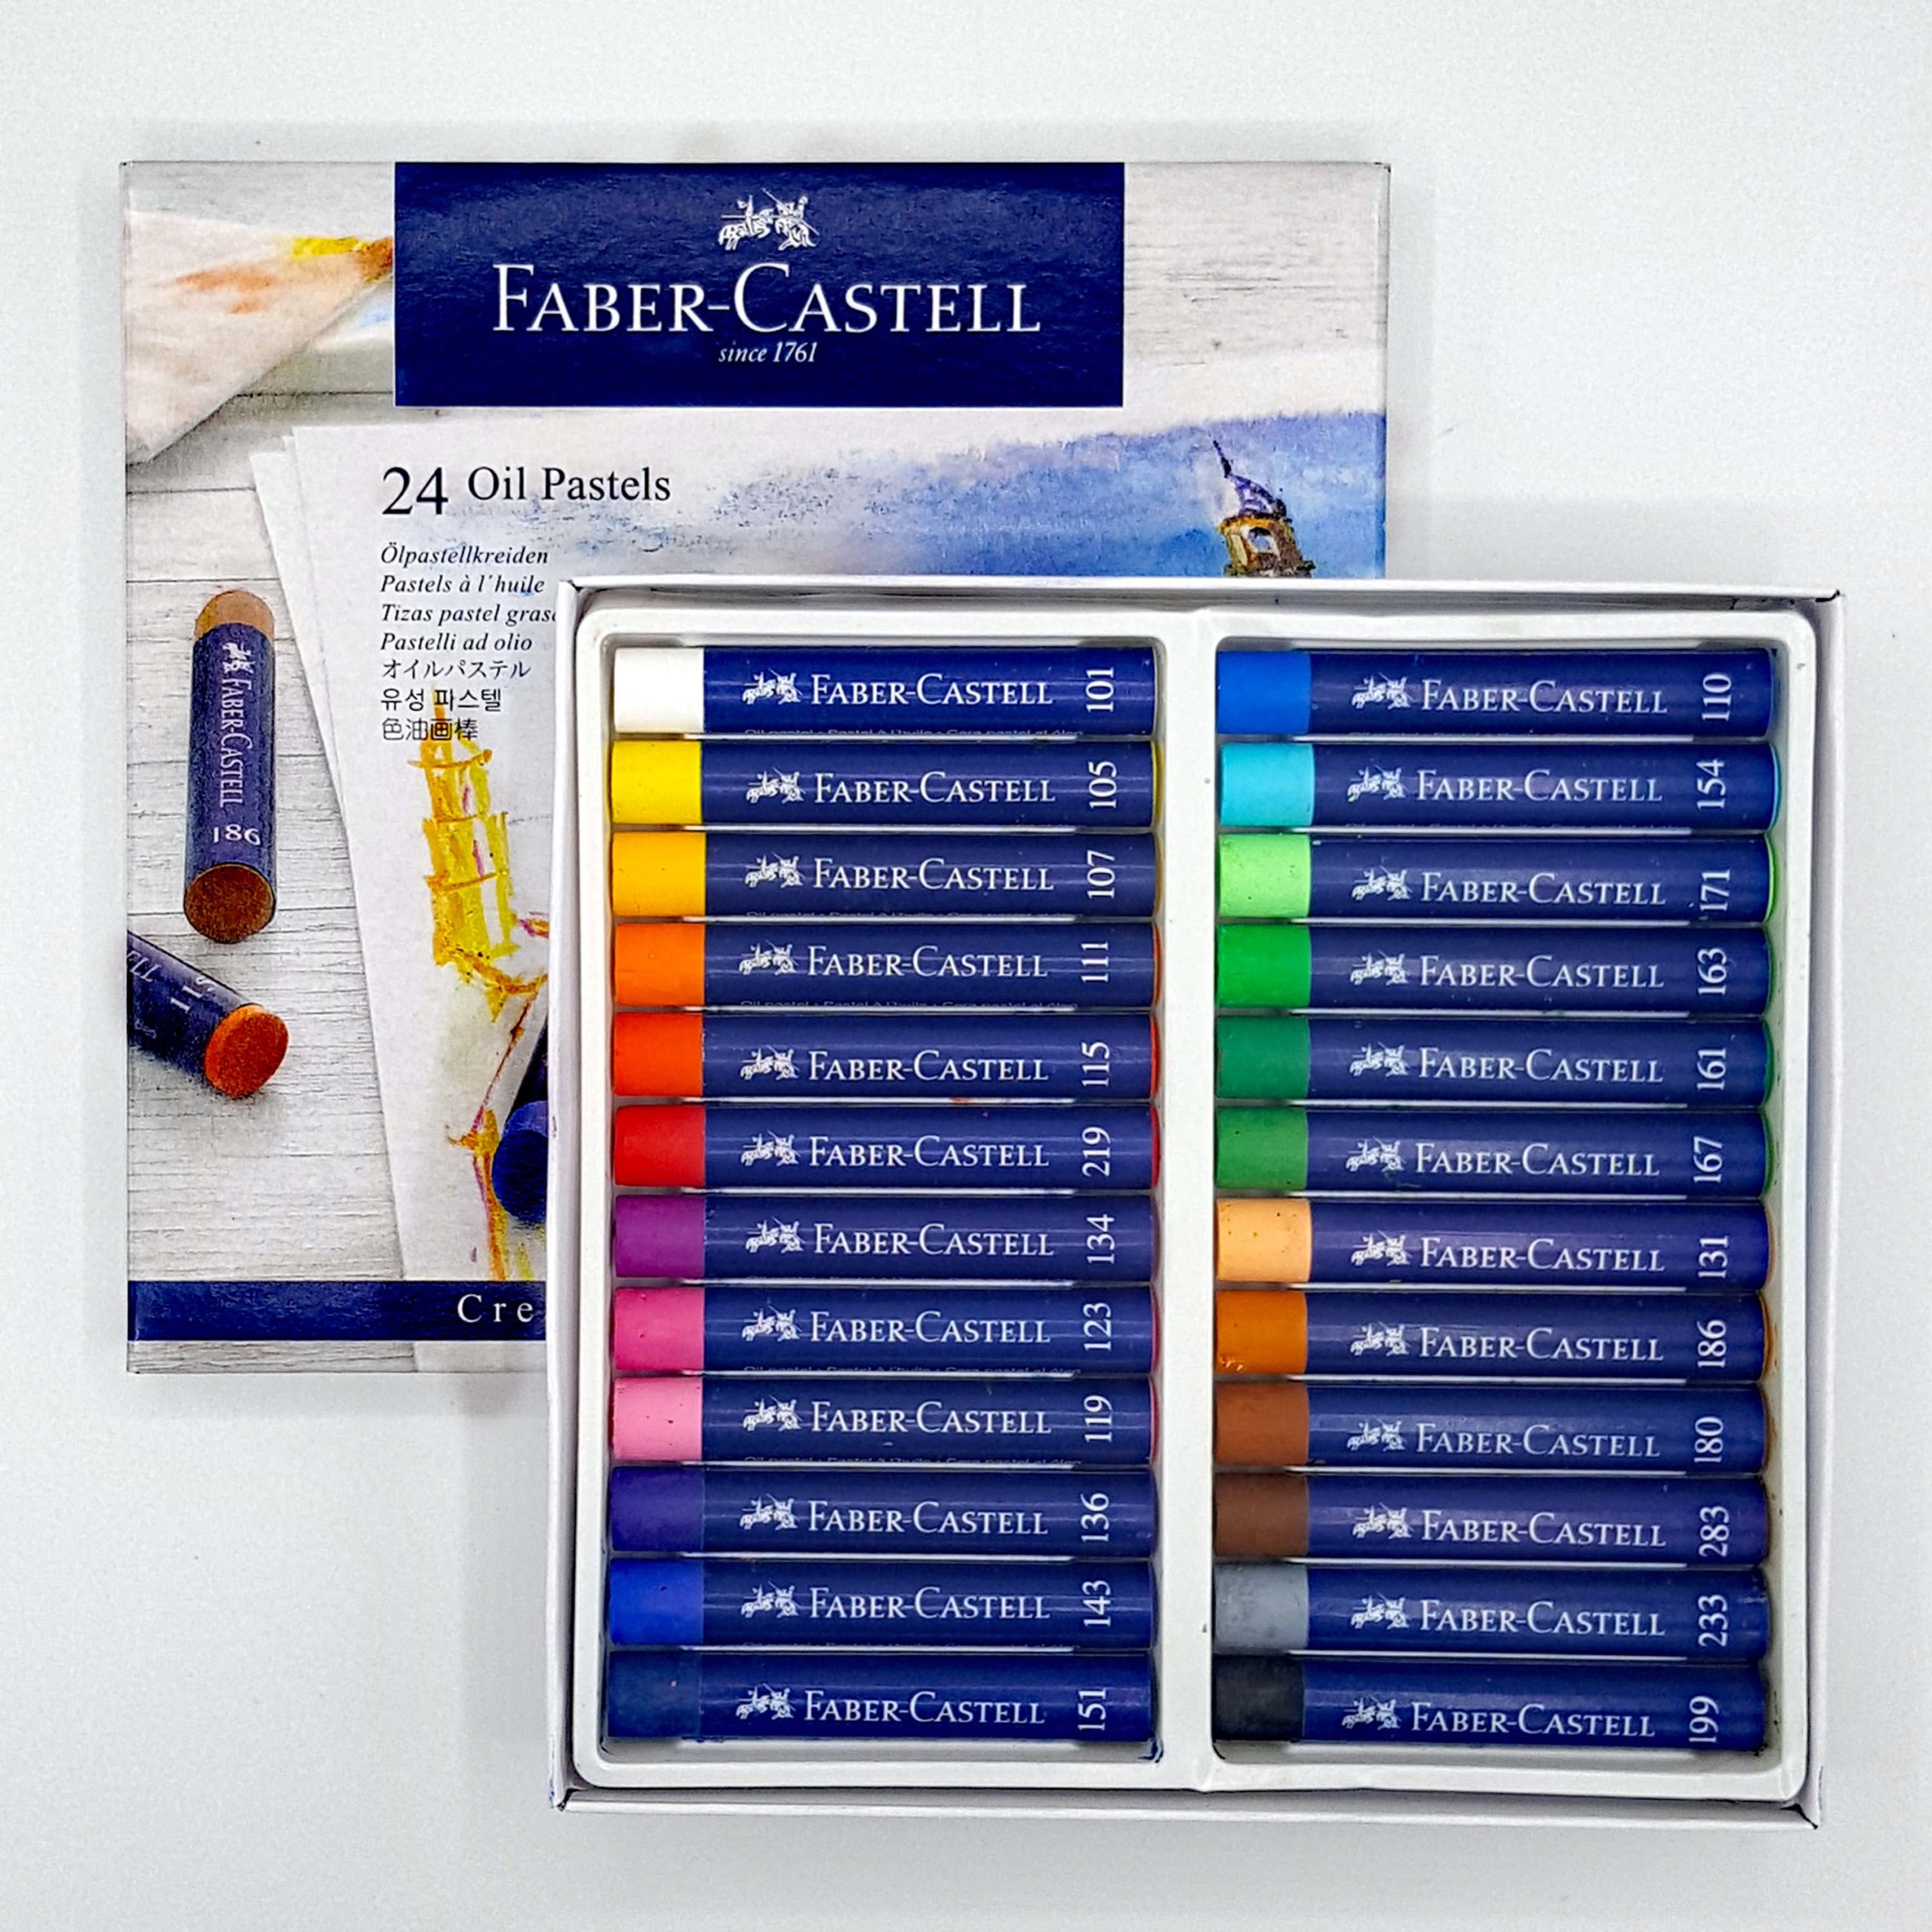 Official Website of Faber-Castell